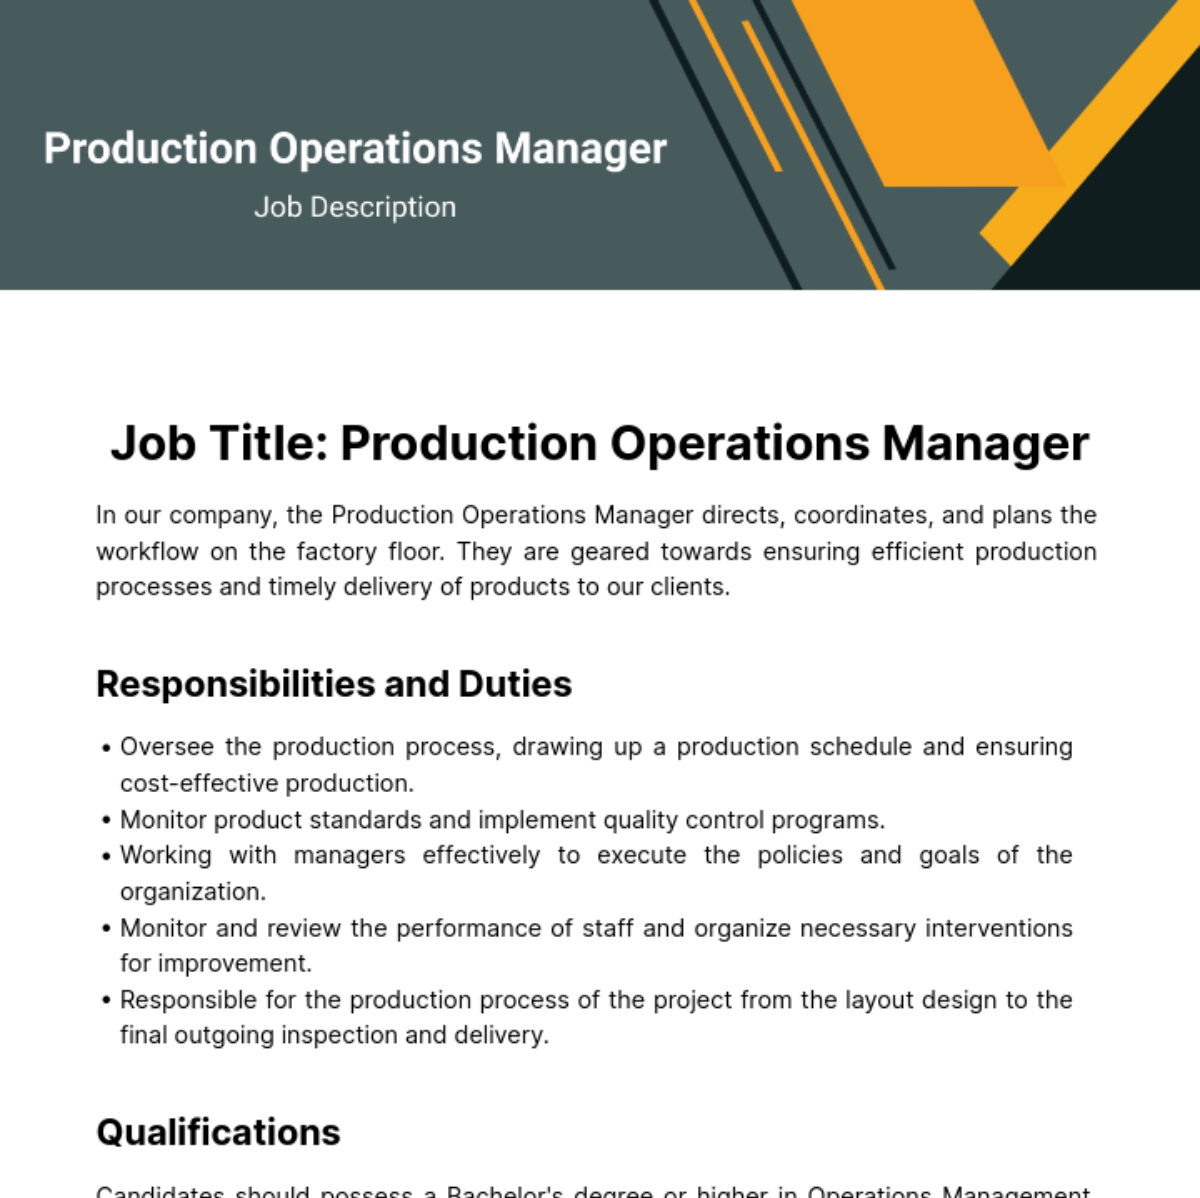 Production Operations Manager Job Description Template